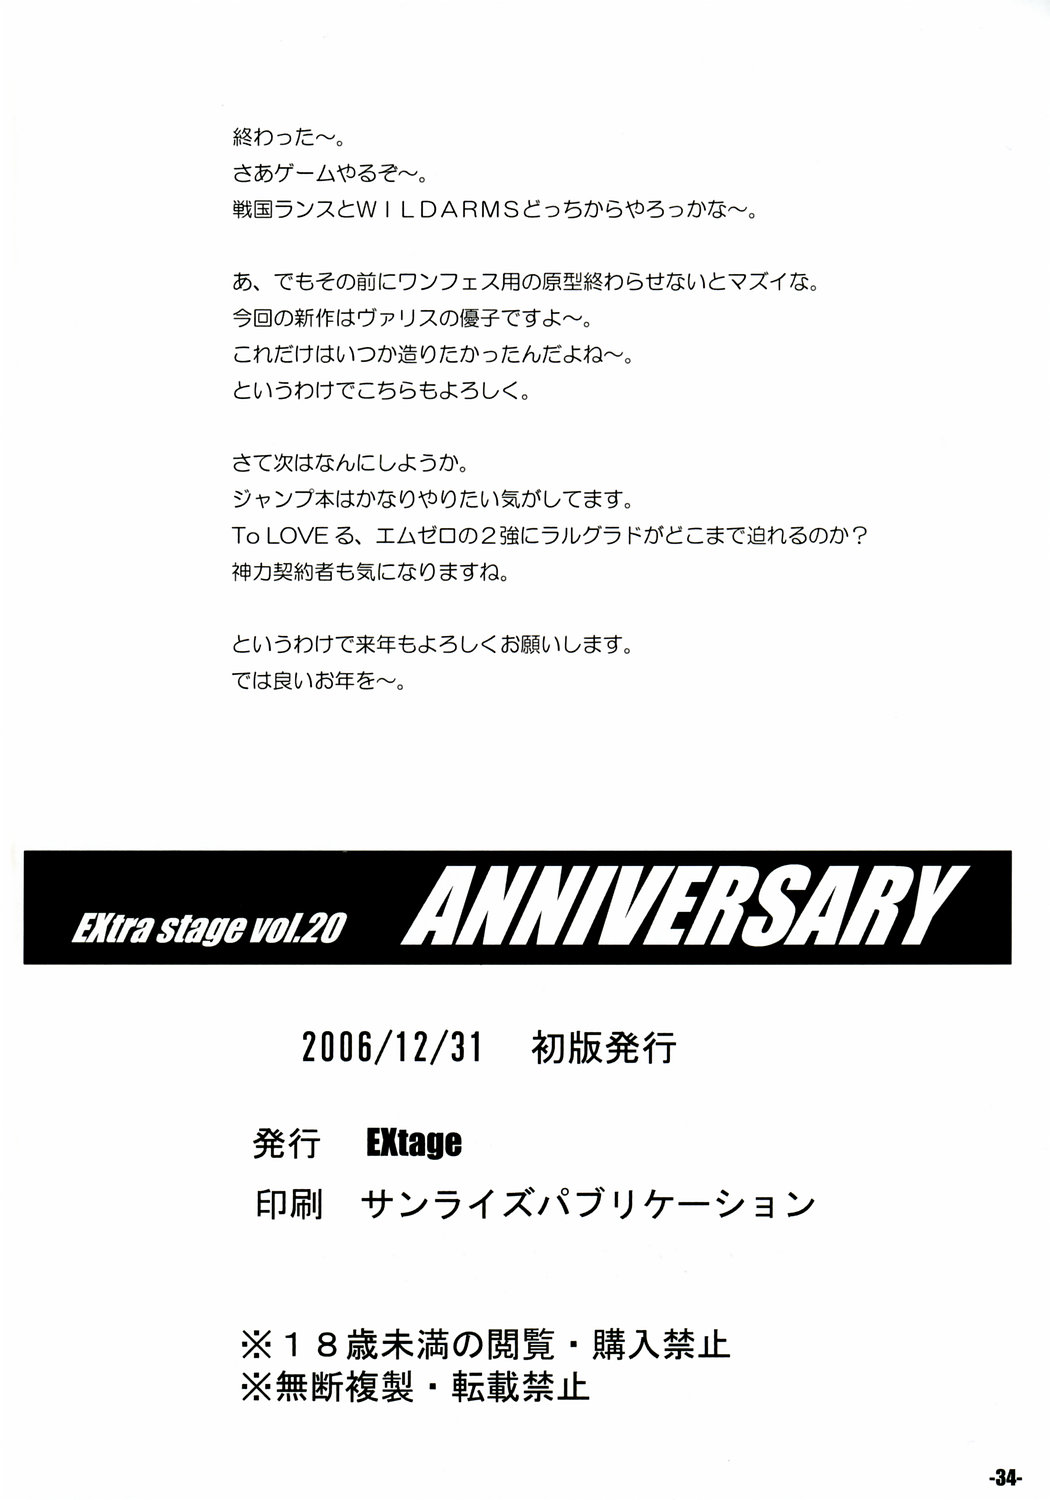 [Extage] EXtra Stage Anniversary Vol. 20 